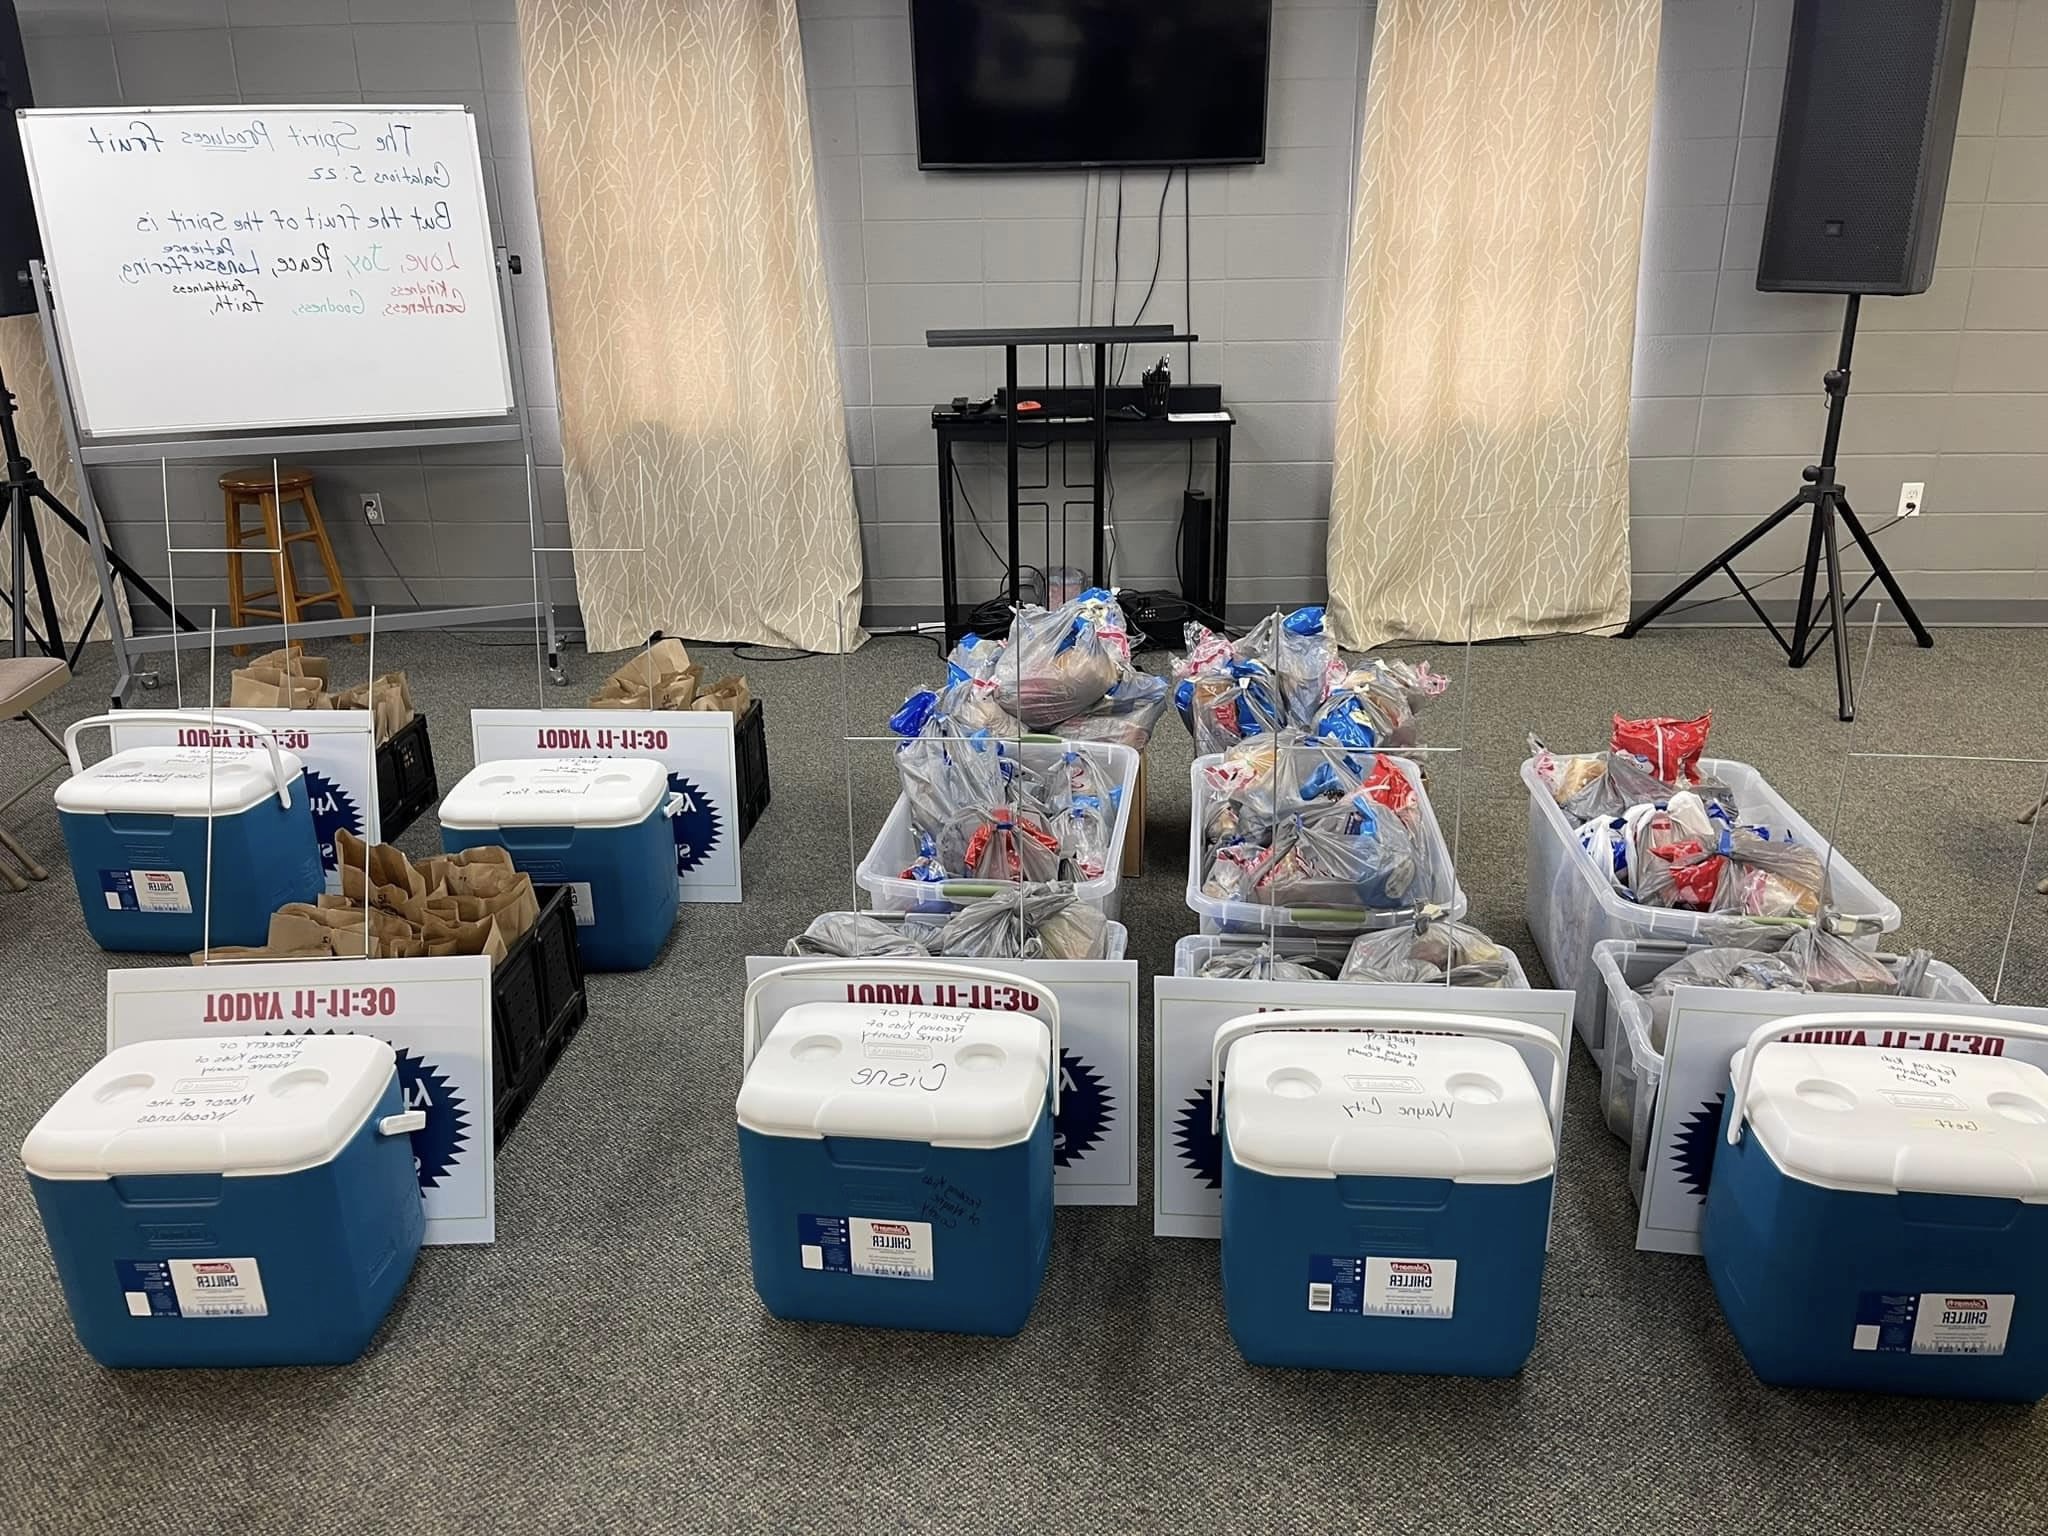 Feeding Kids of Wayne County Serves 60 On First Day of Program